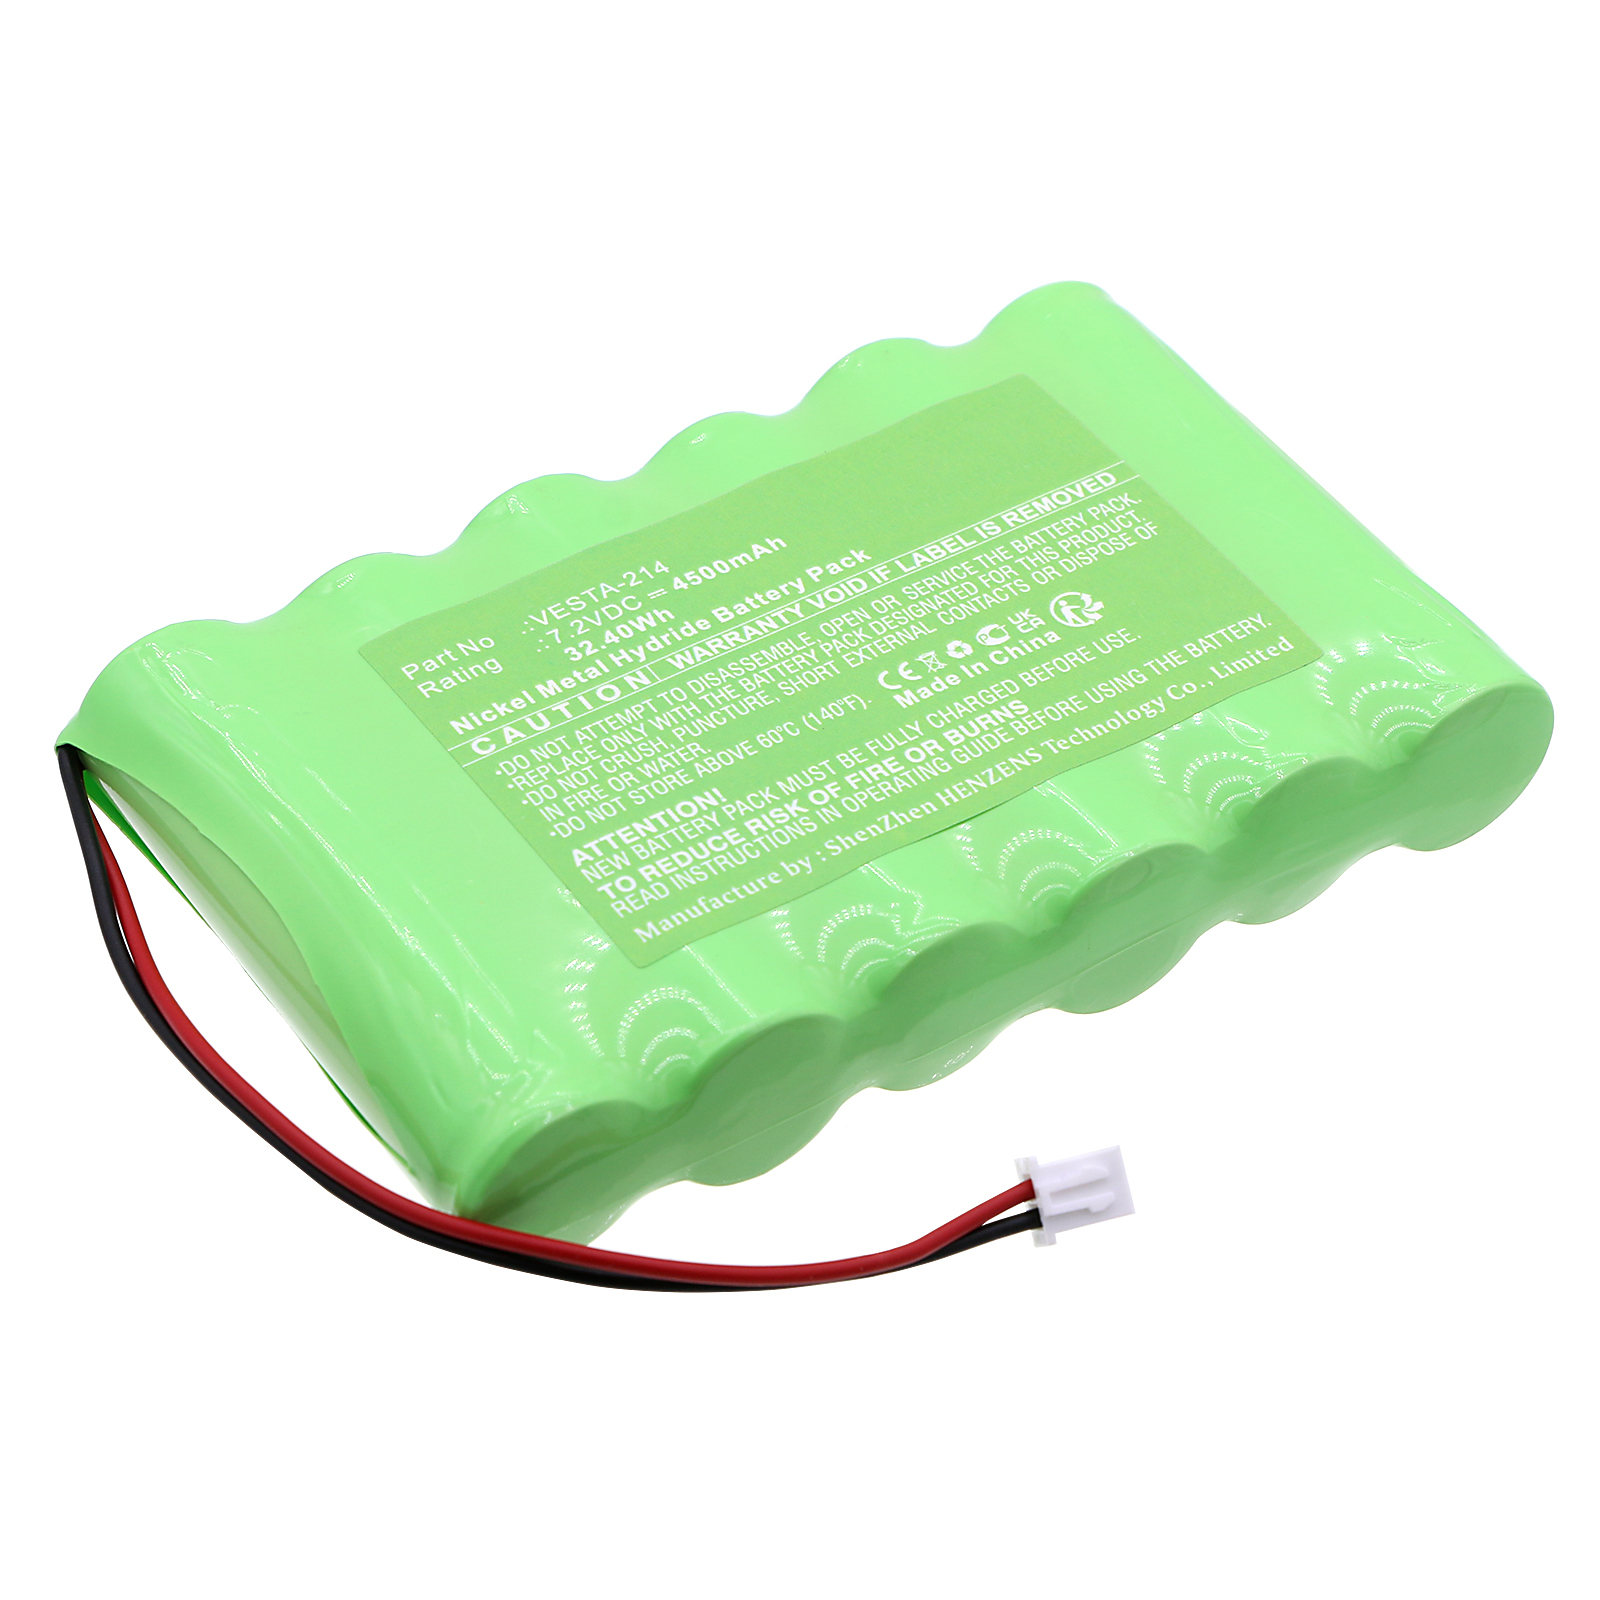 Synergy Digital Alarm System Battery, Compatible with Vesta VESTA-214 Alarm System Battery (Ni-MH, 7.2V, 4500mAh)